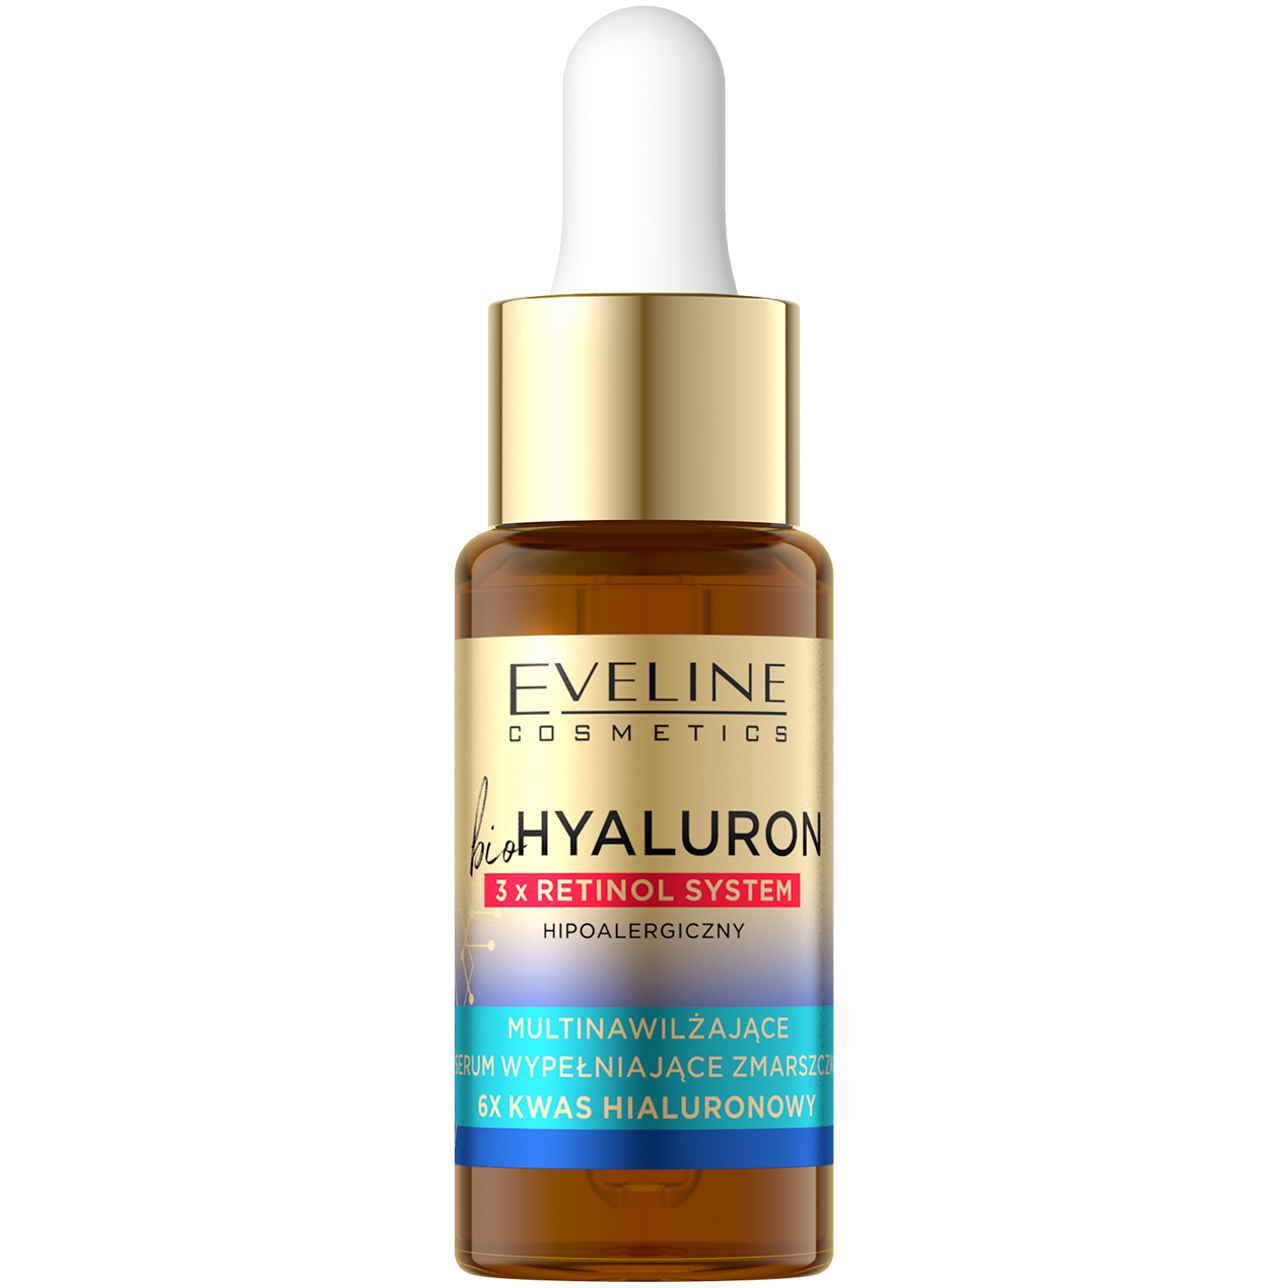 Eveline Cosmetics Biohyaluron сыворотка для лица, 18 мл